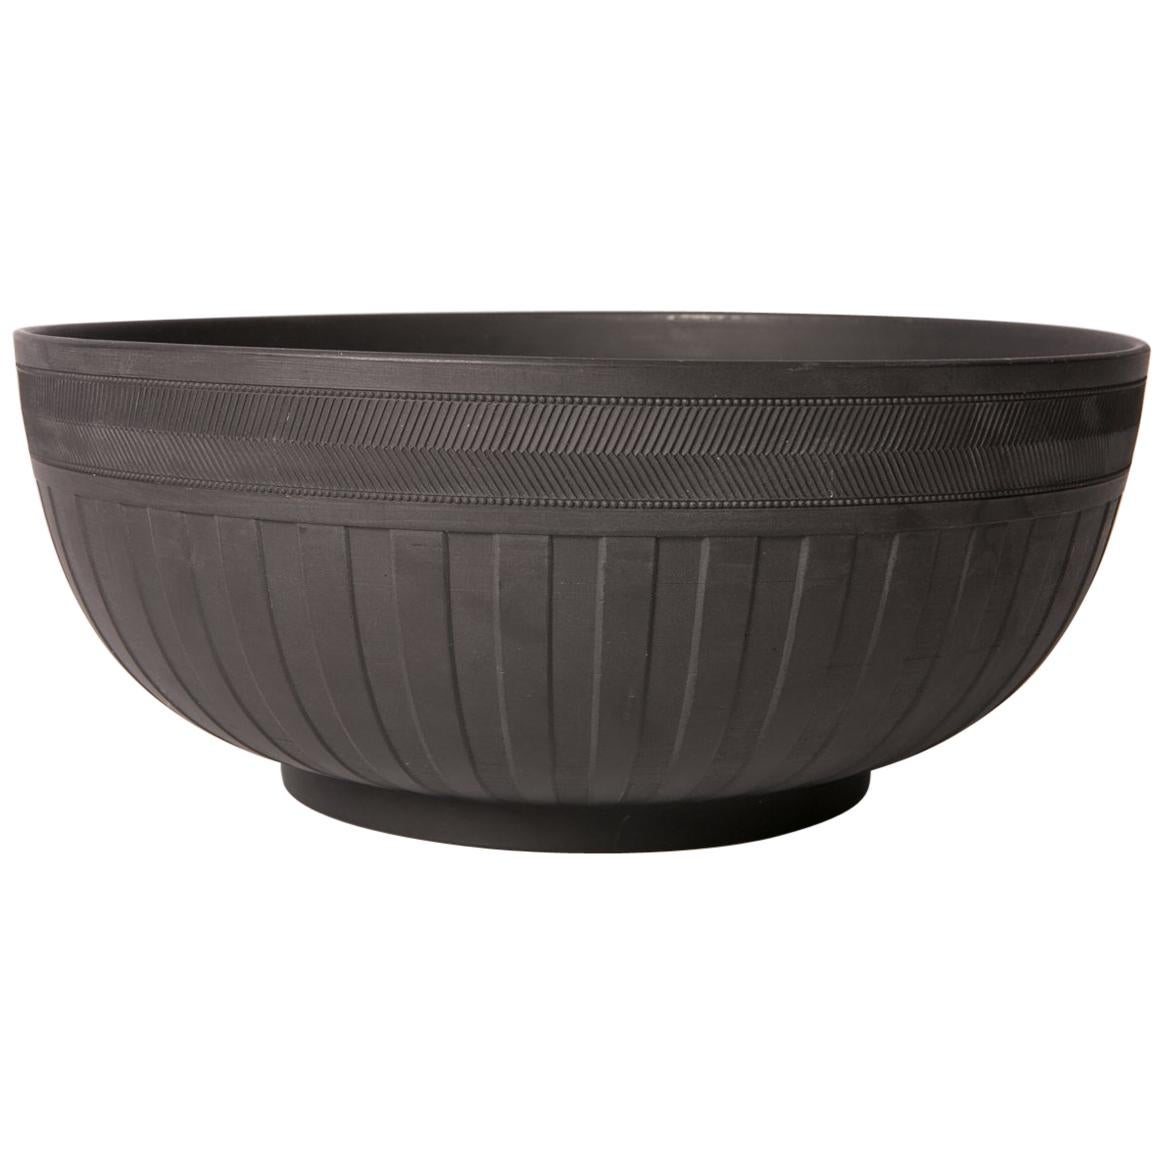  Large Wedgwood Black Basalt Bowl